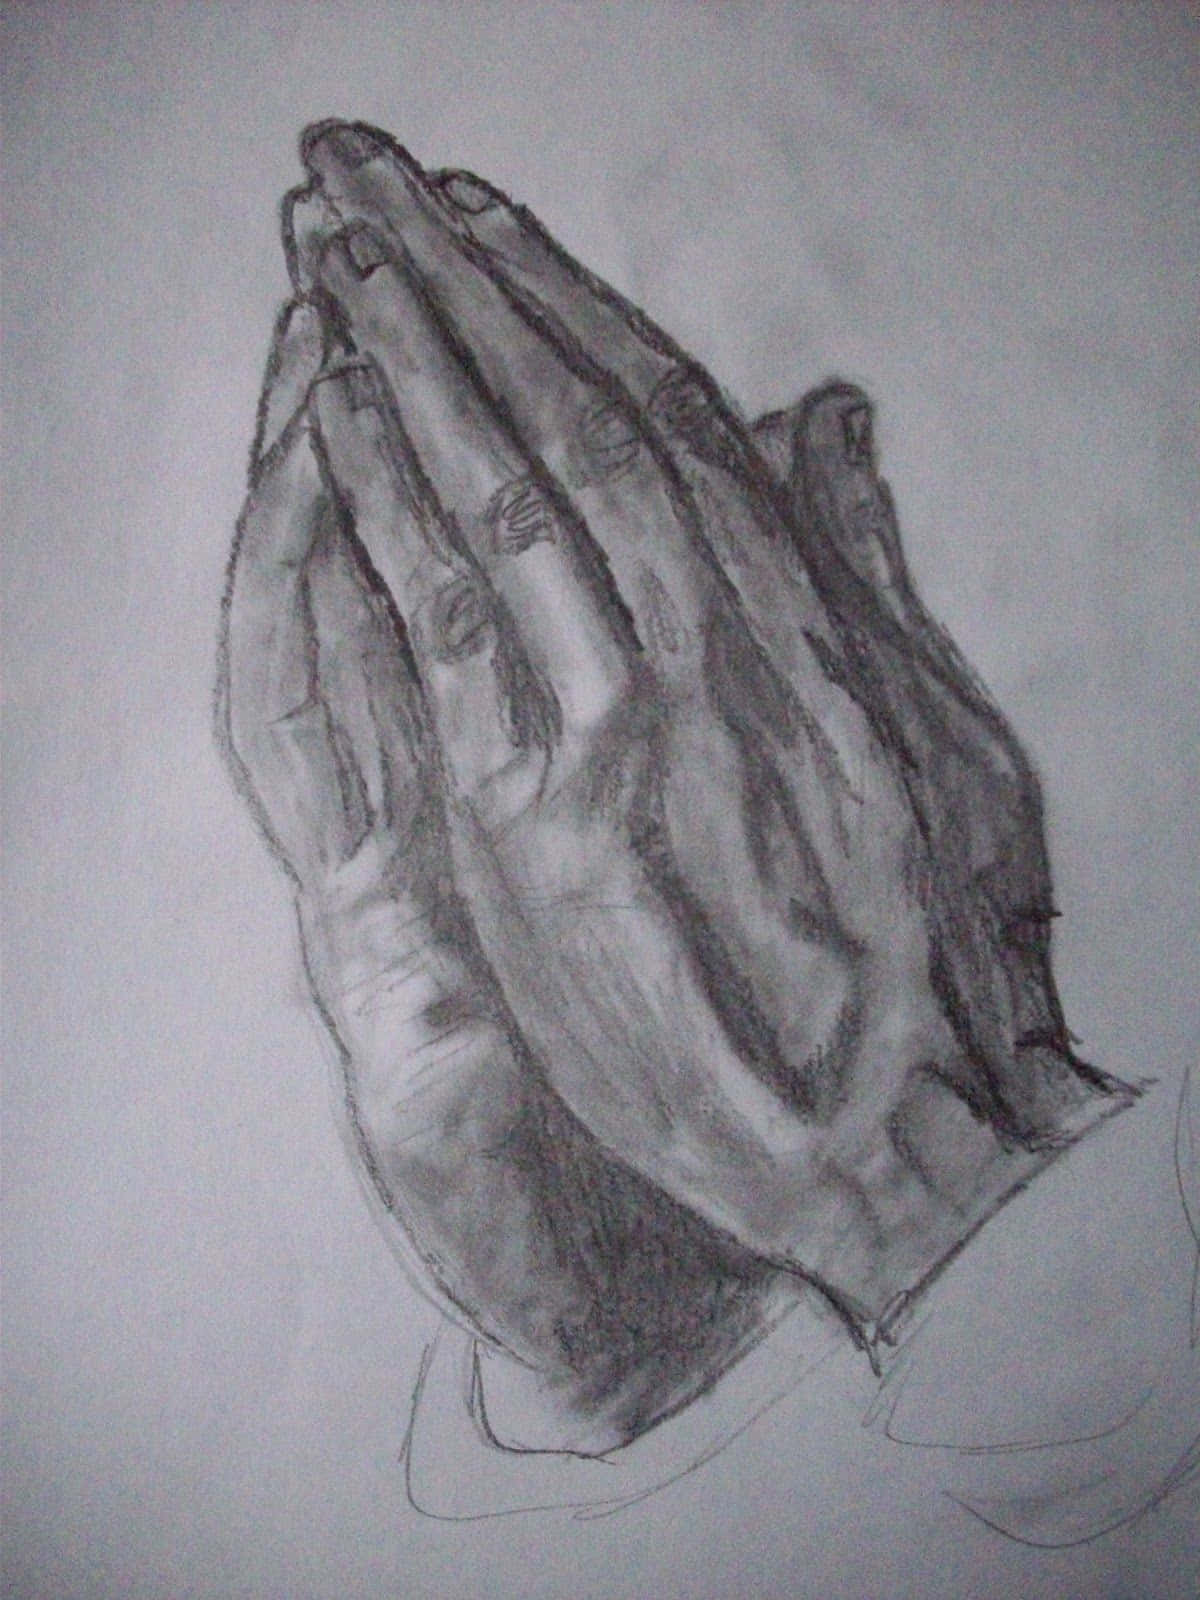 Praying Hands, A Surrender To God